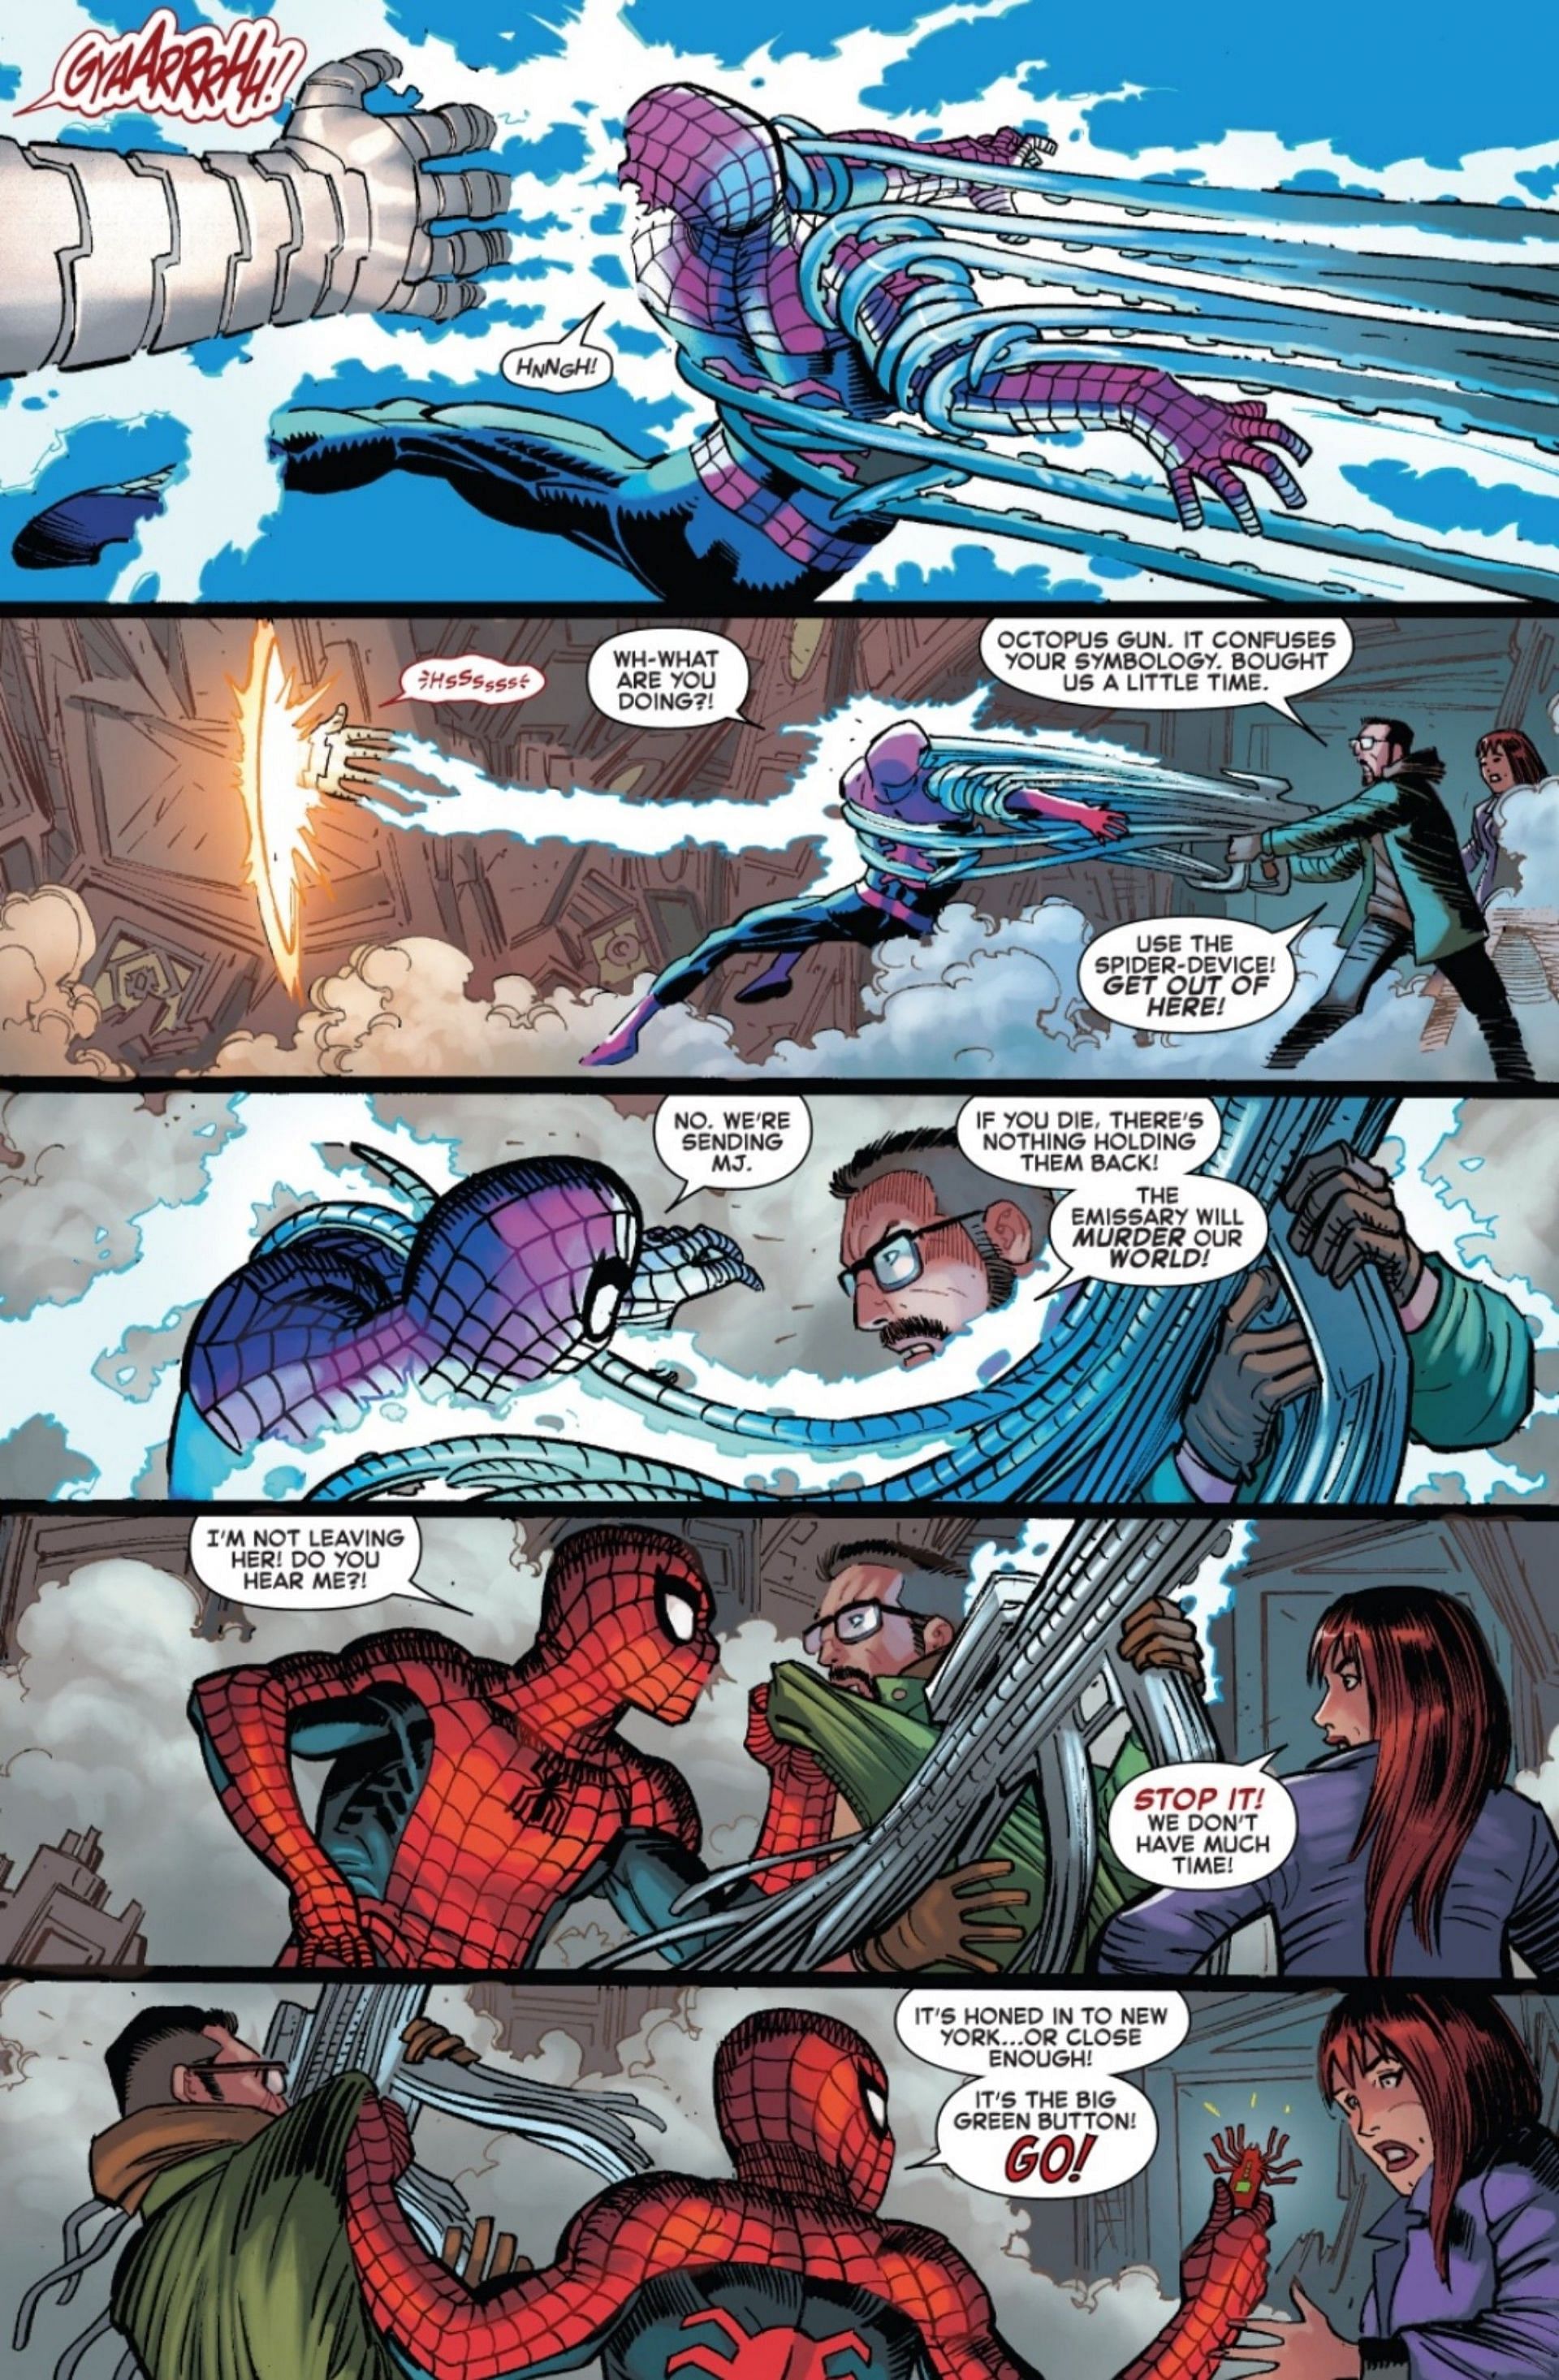 Paul saving Peter from Wayeb (Image via Marvel Comics)